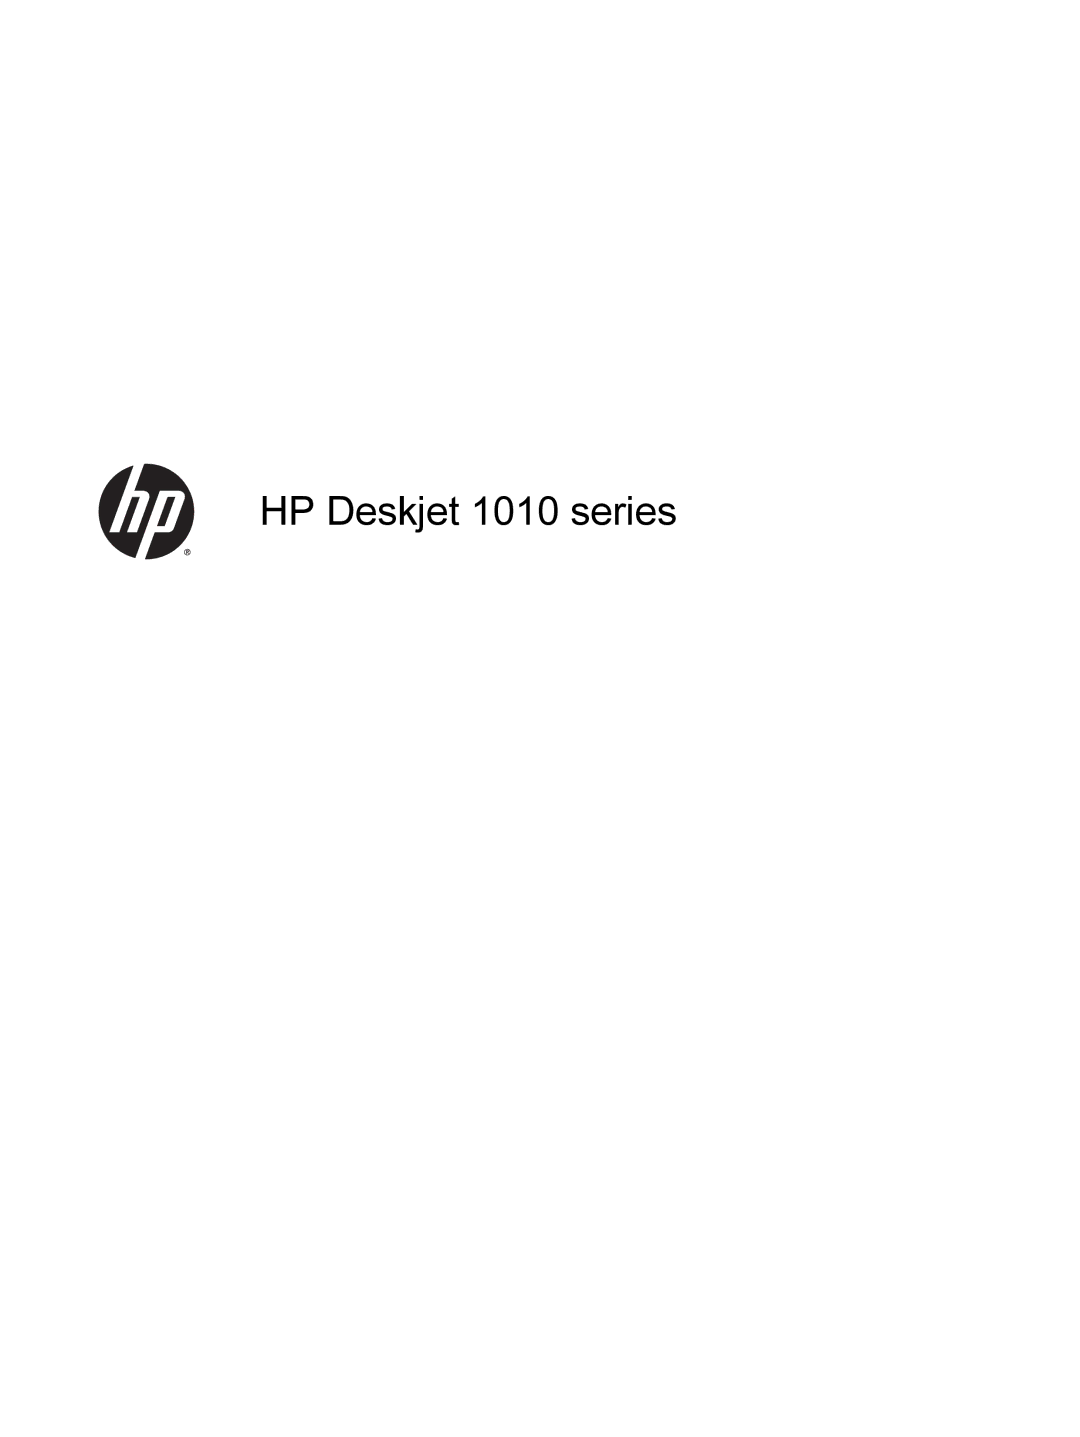 HP 1010 COMMERCIAL INKJETPR CX015A#B1H, 1010 Commercial Inkjet CX015AB1H manual HP Deskjet 1010 series 